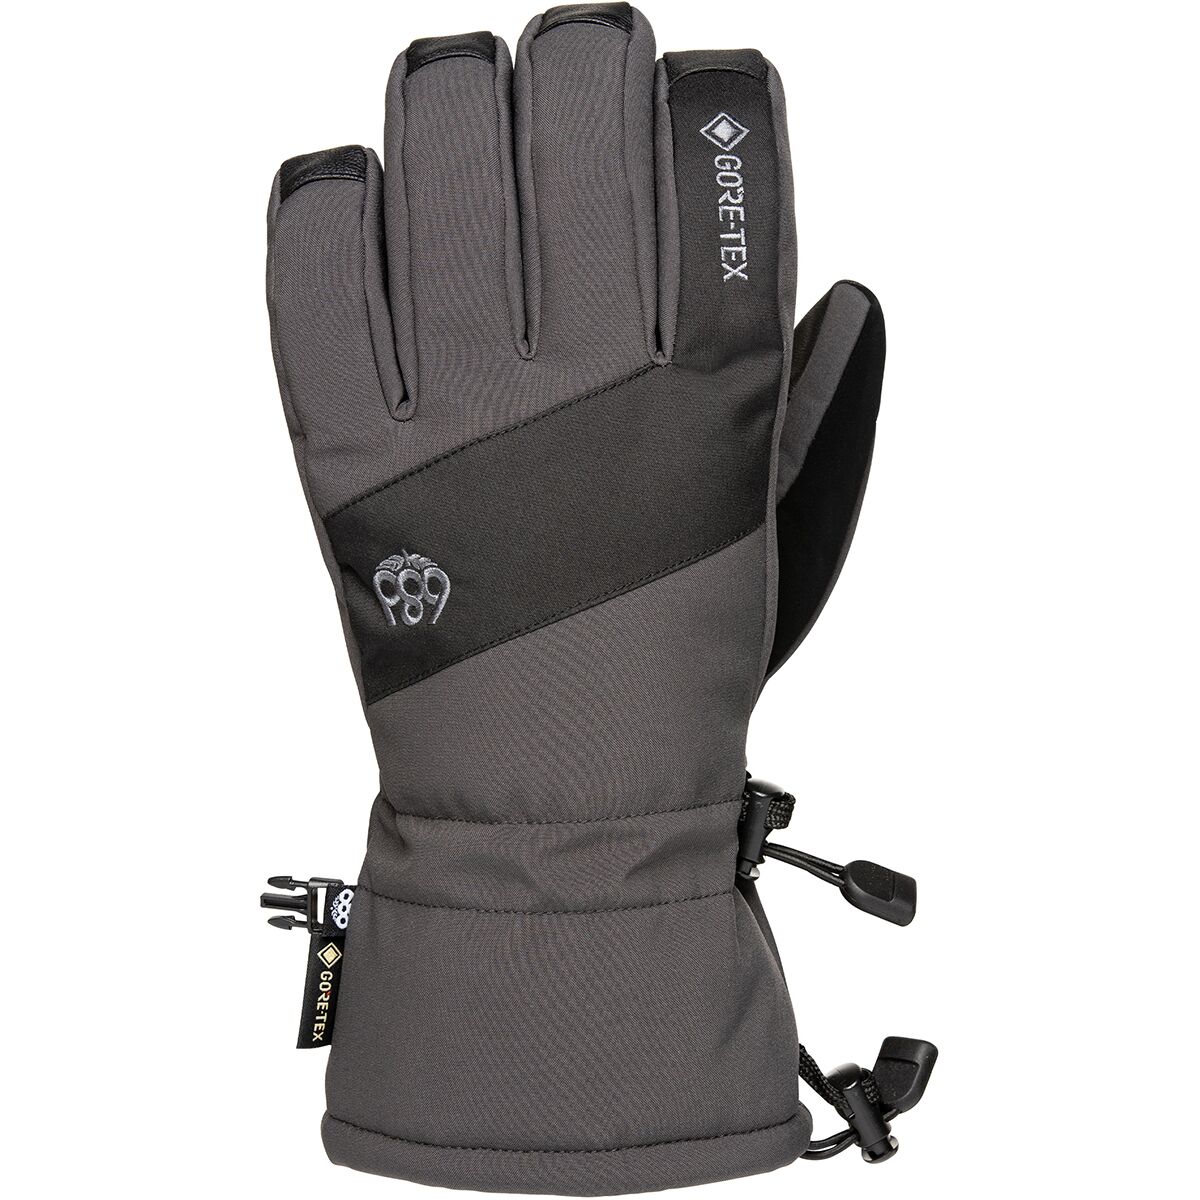 Linear GORE-TEX Glove - Men